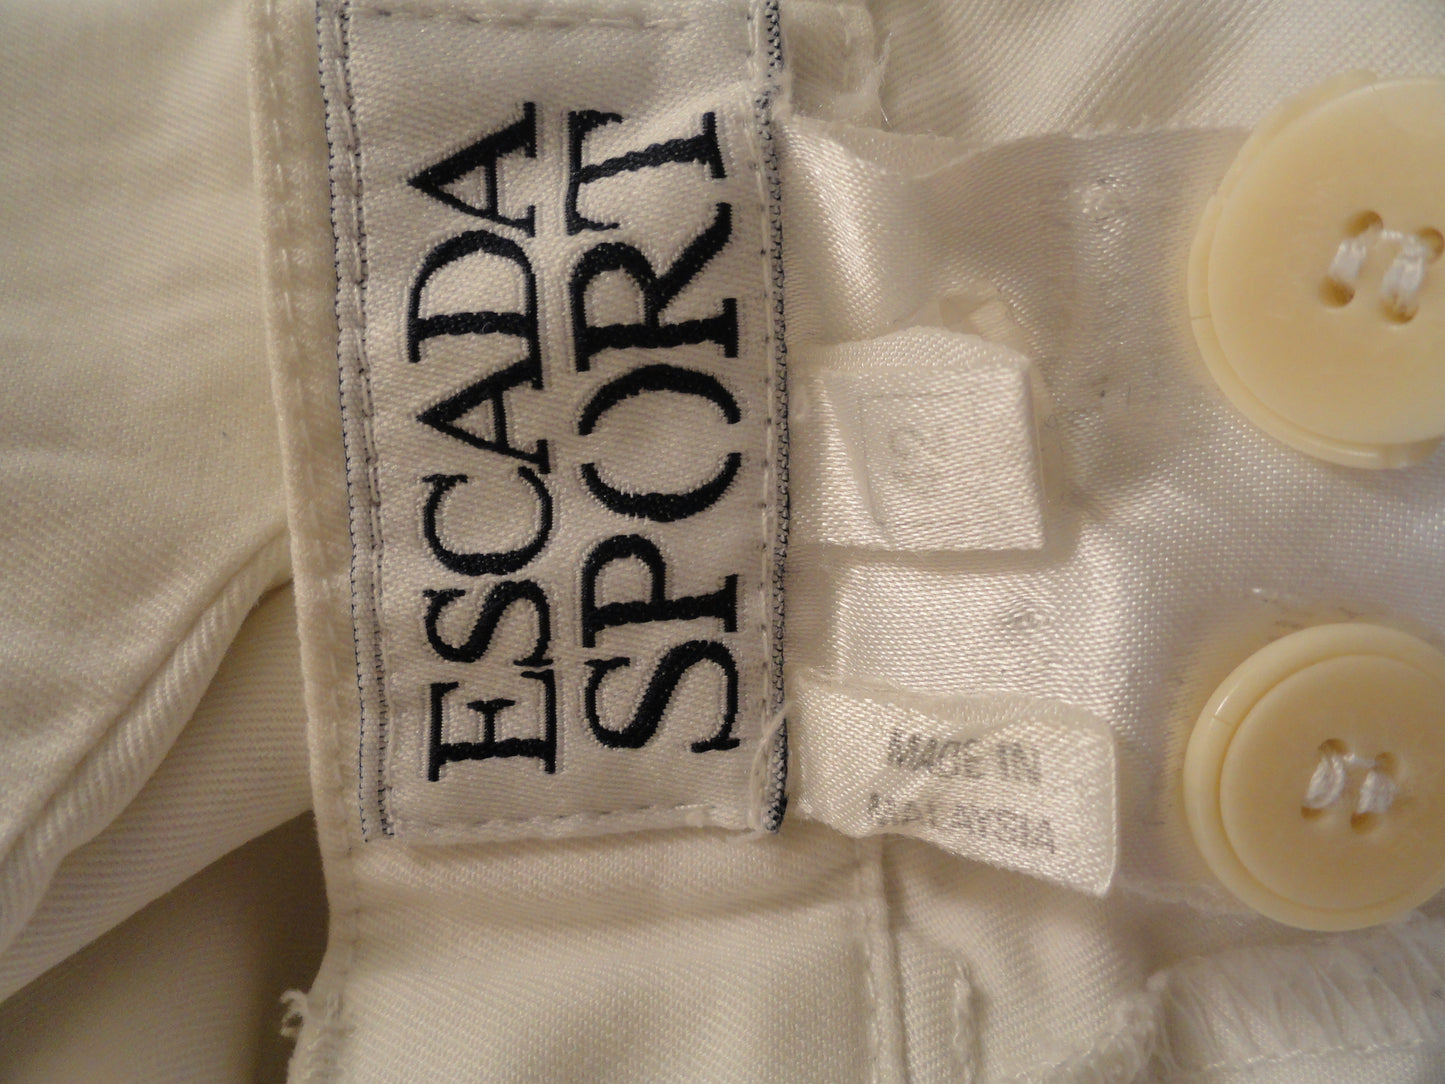 Escada Sport White Pants Size 42 SKU 000125